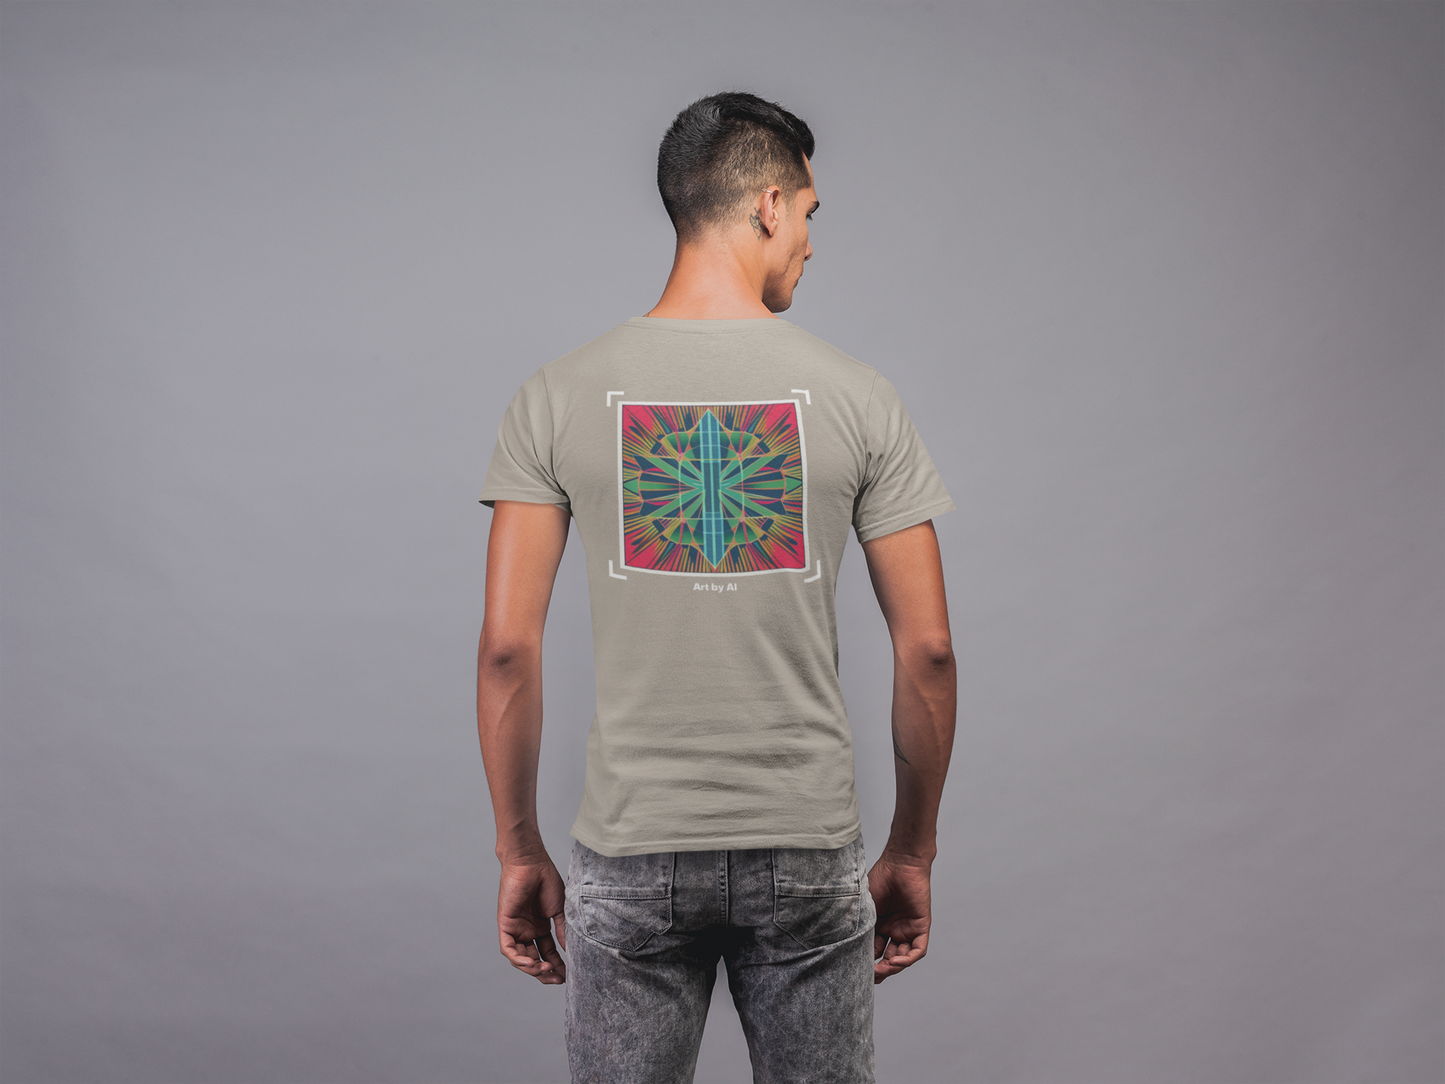 Art by AI | Hemp Sheet | Shirt (Organic)